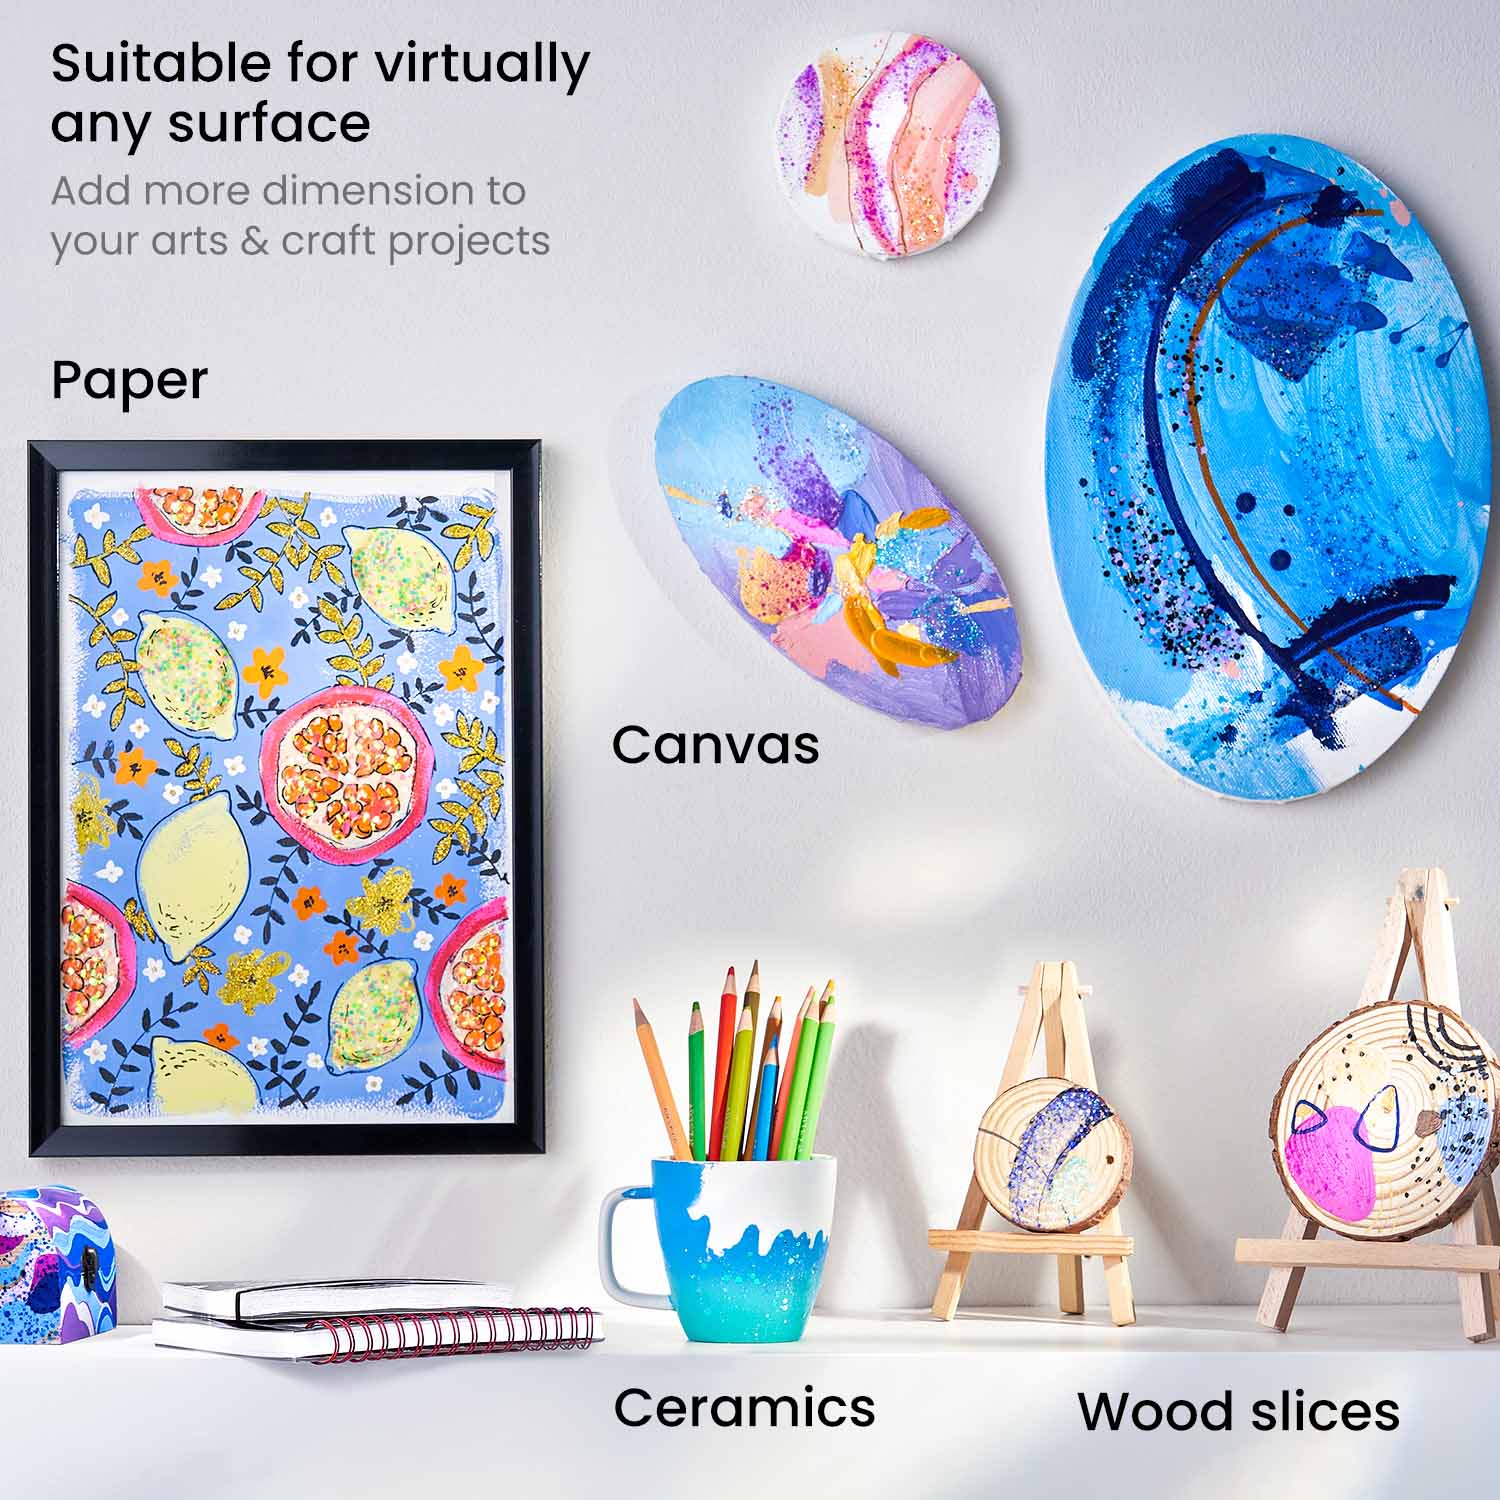 CREATOLOGY- Acrylic Kid's Paint Set - Glitter - 10 Colors Arts